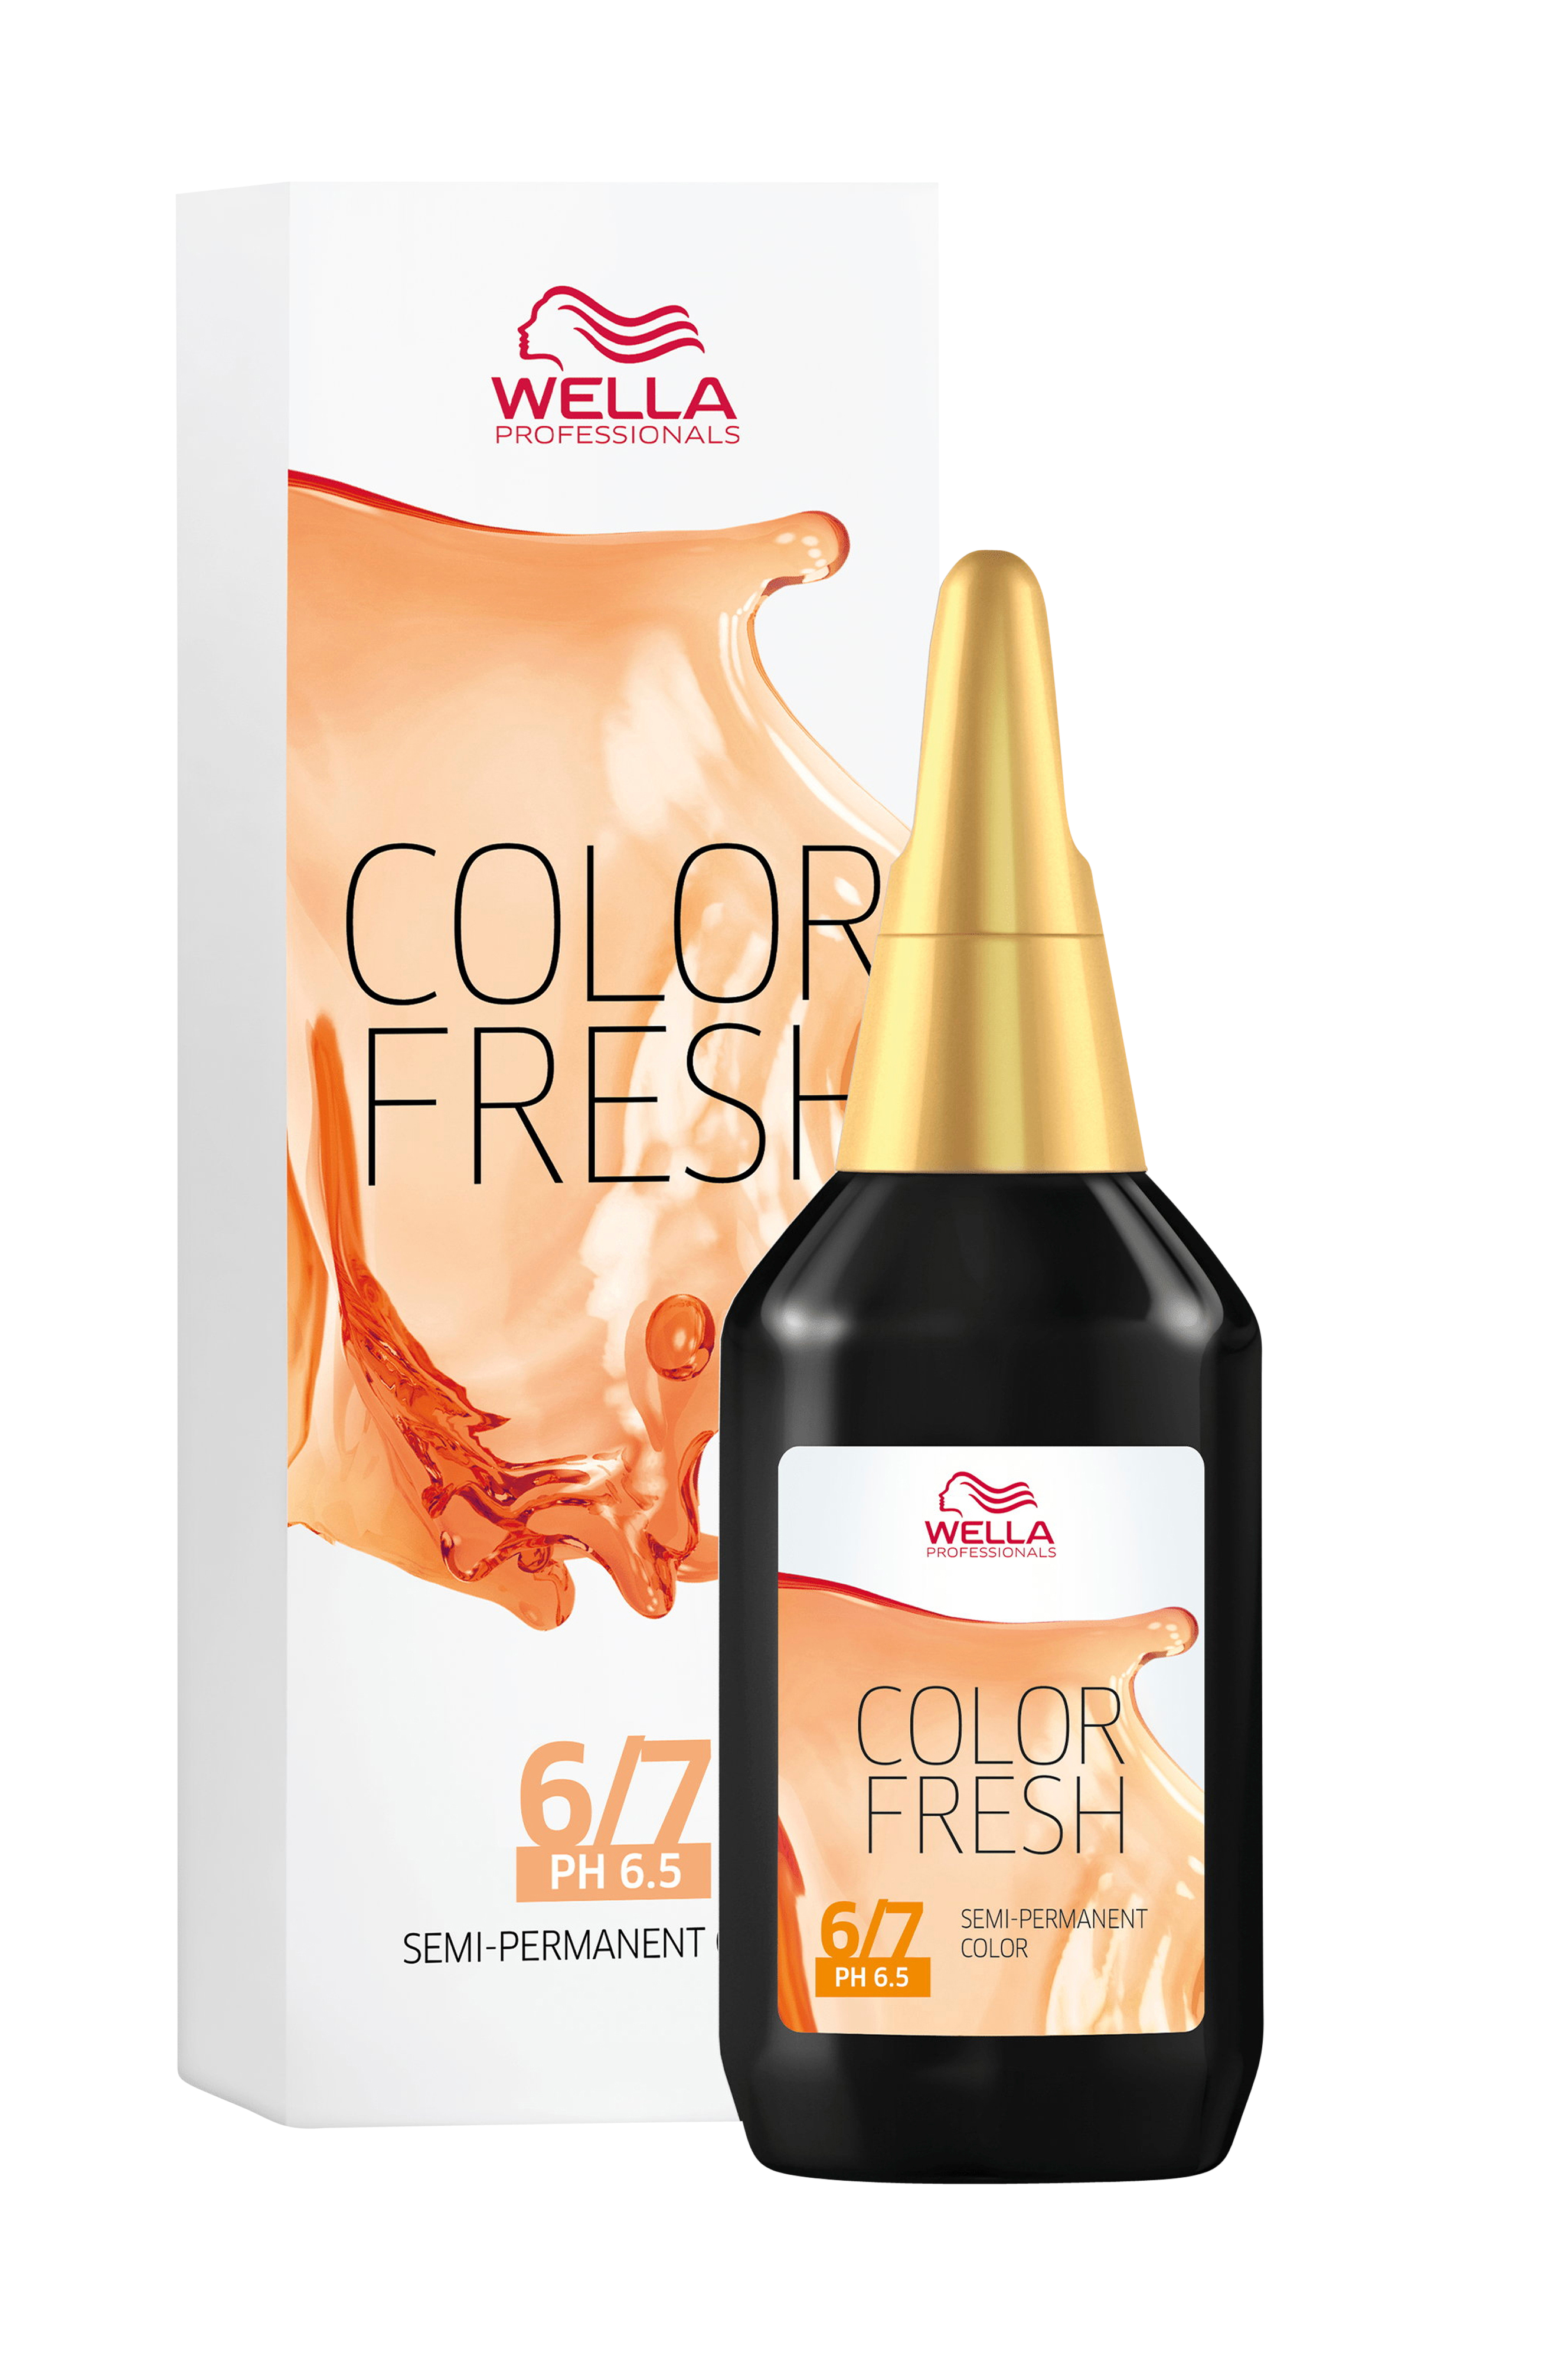 Оттеночная велла. Wella Color Fresh палитра. Wella Color Fresh оттеночная краска. Велла колор Фреш 5/07. Оттеночная маска Wella Color Fresh.